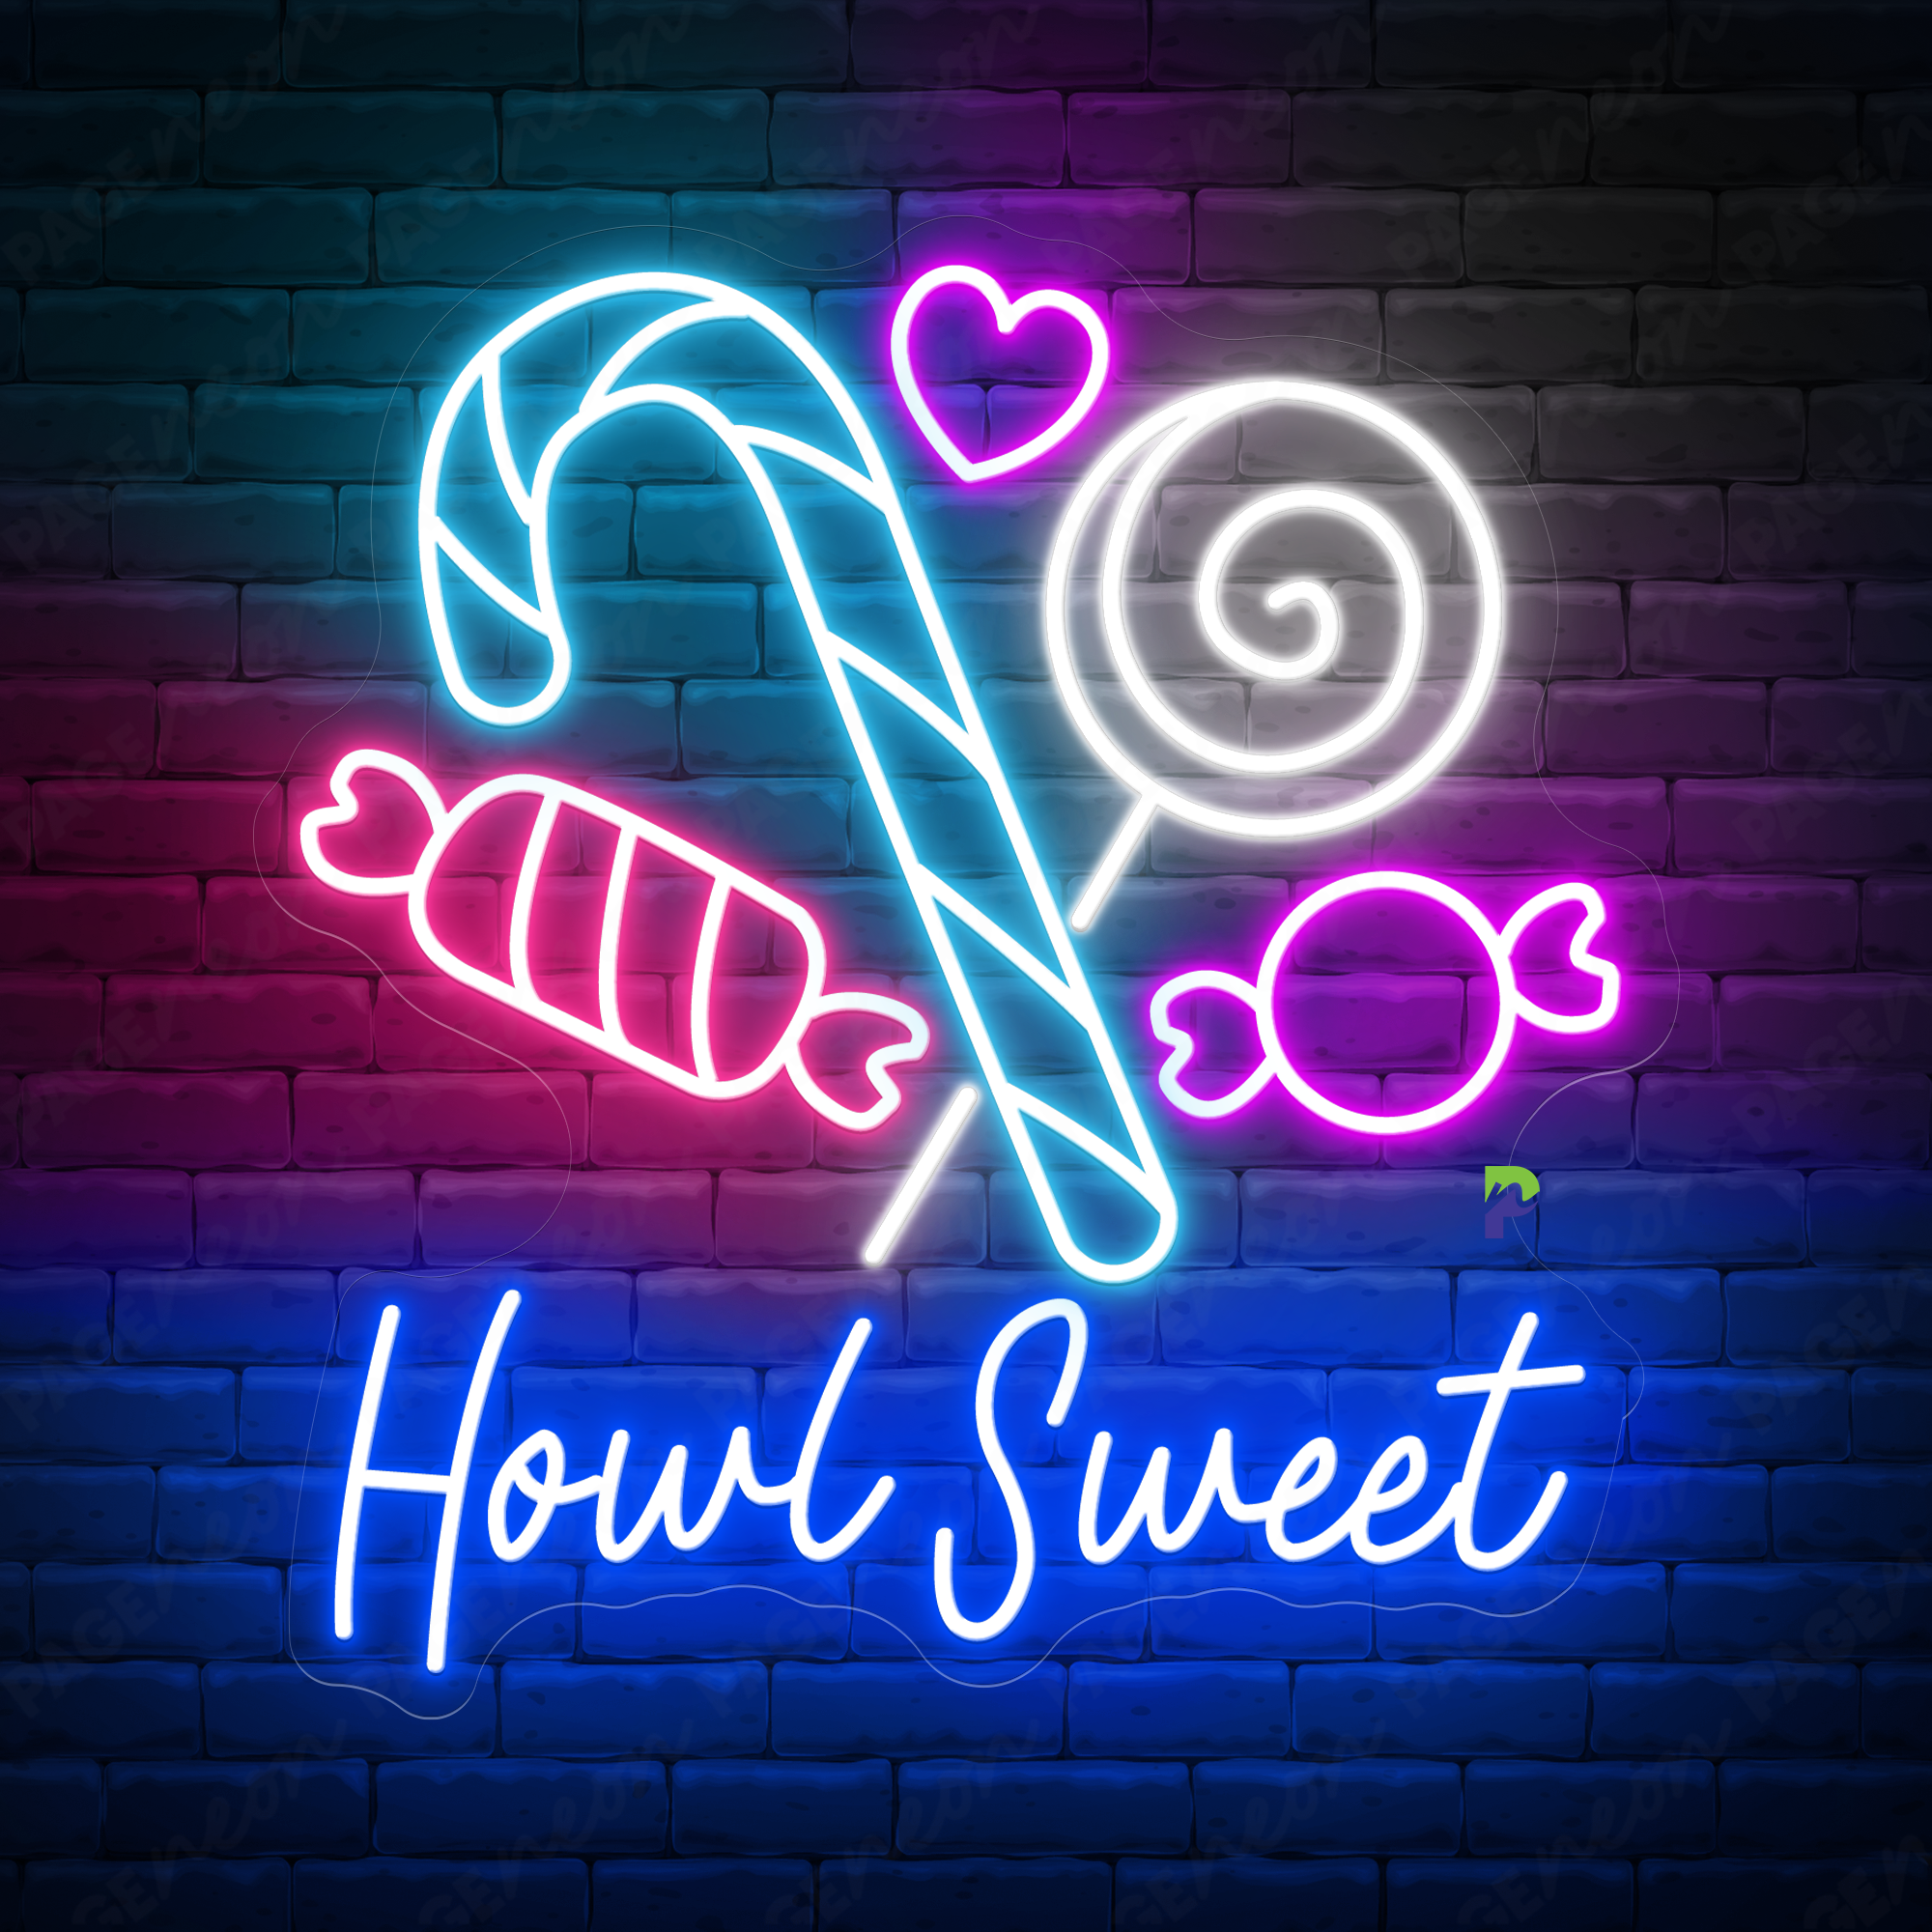 Neon Sweets Sign Custom Name Led Light